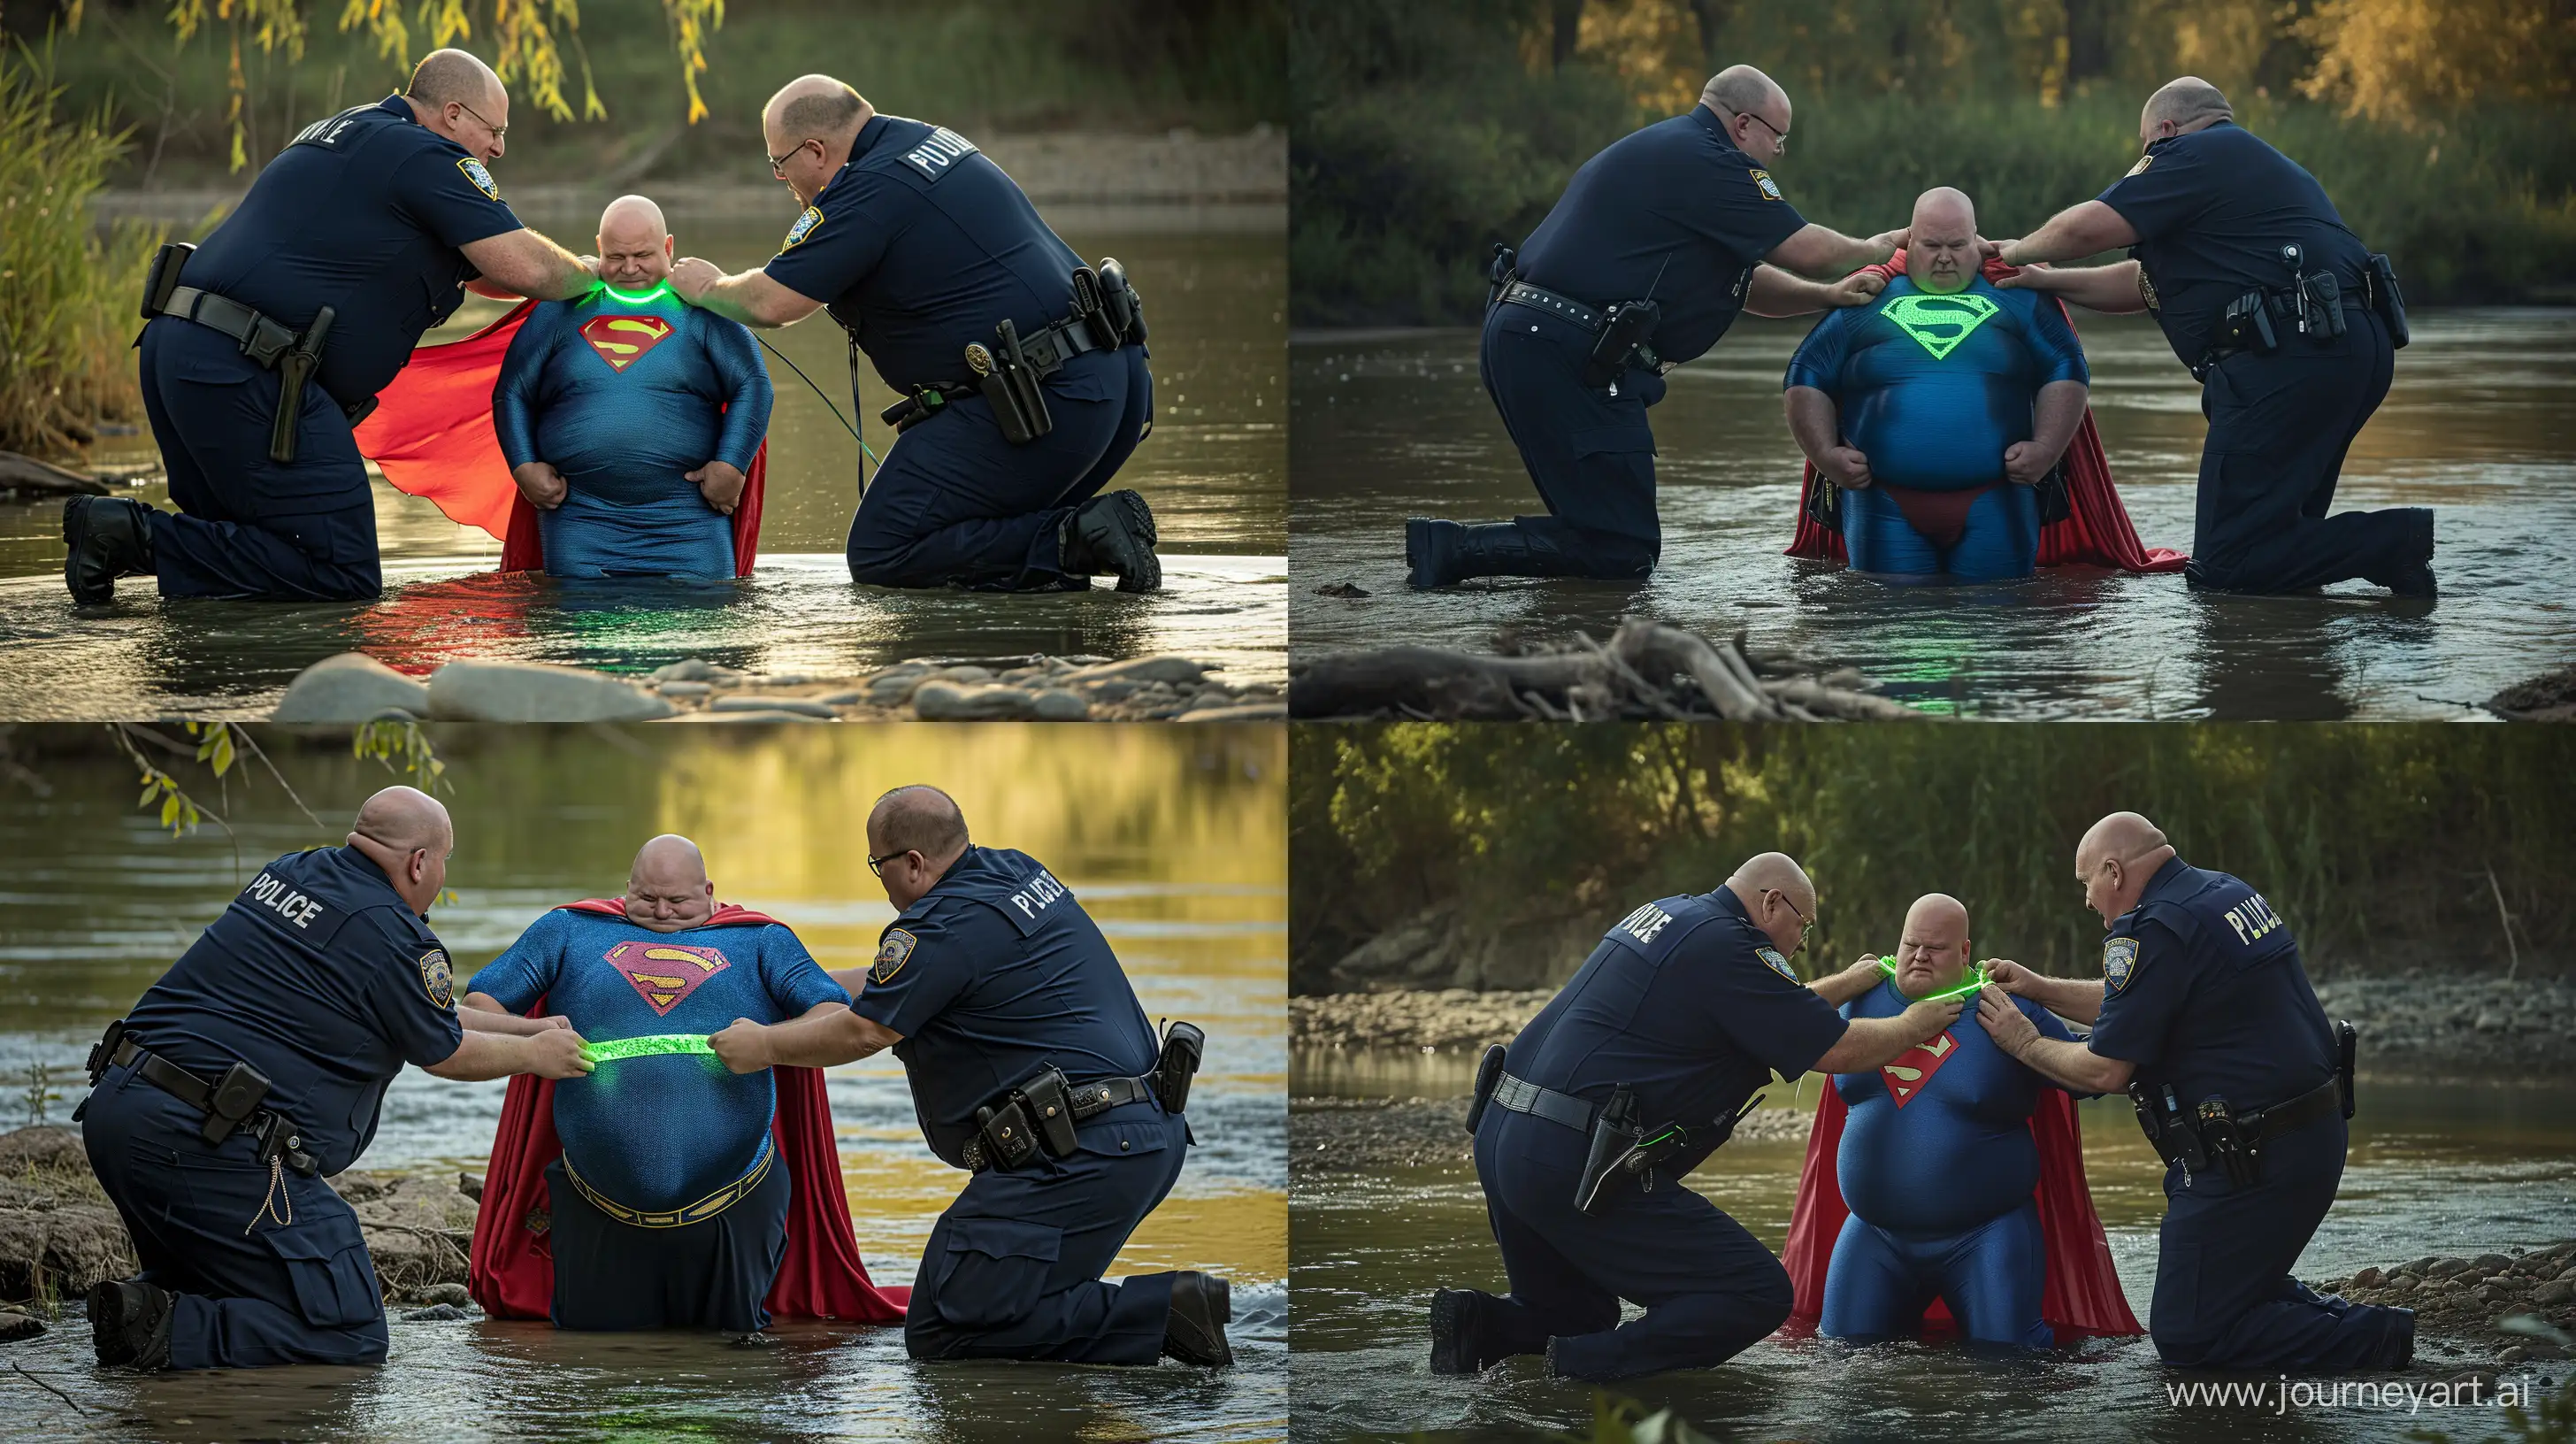 Elderly-Police-Duo-Securing-Glowing-Strap-on-WaterSubmerged-Superman